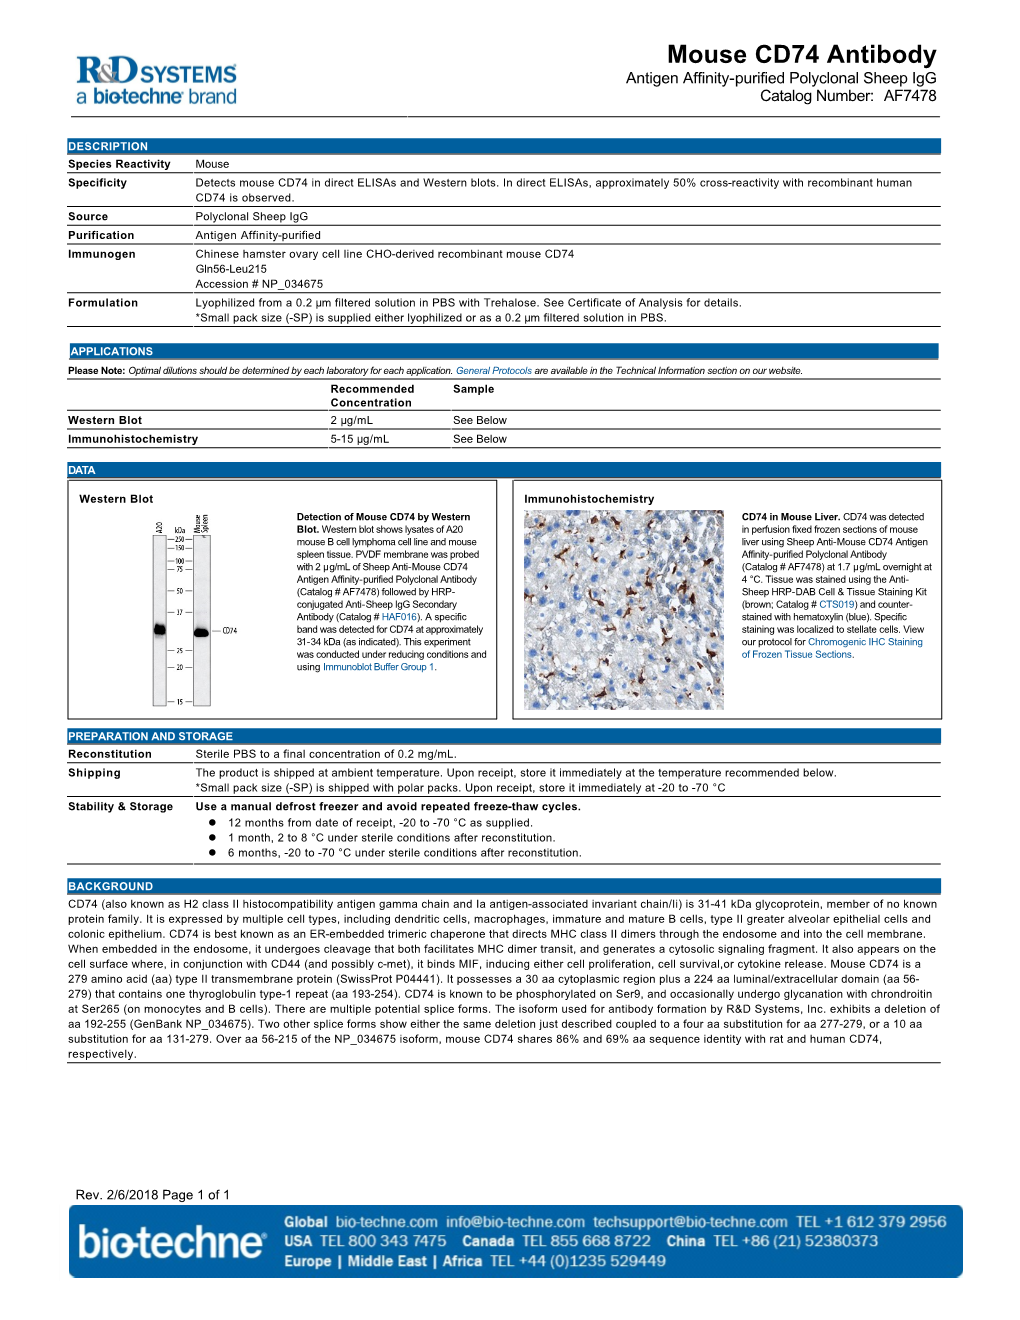 Mouse CD74 Antibody Antigen Affinity-Purified Polyclonal Sheep Igg Catalog Number: AF7478